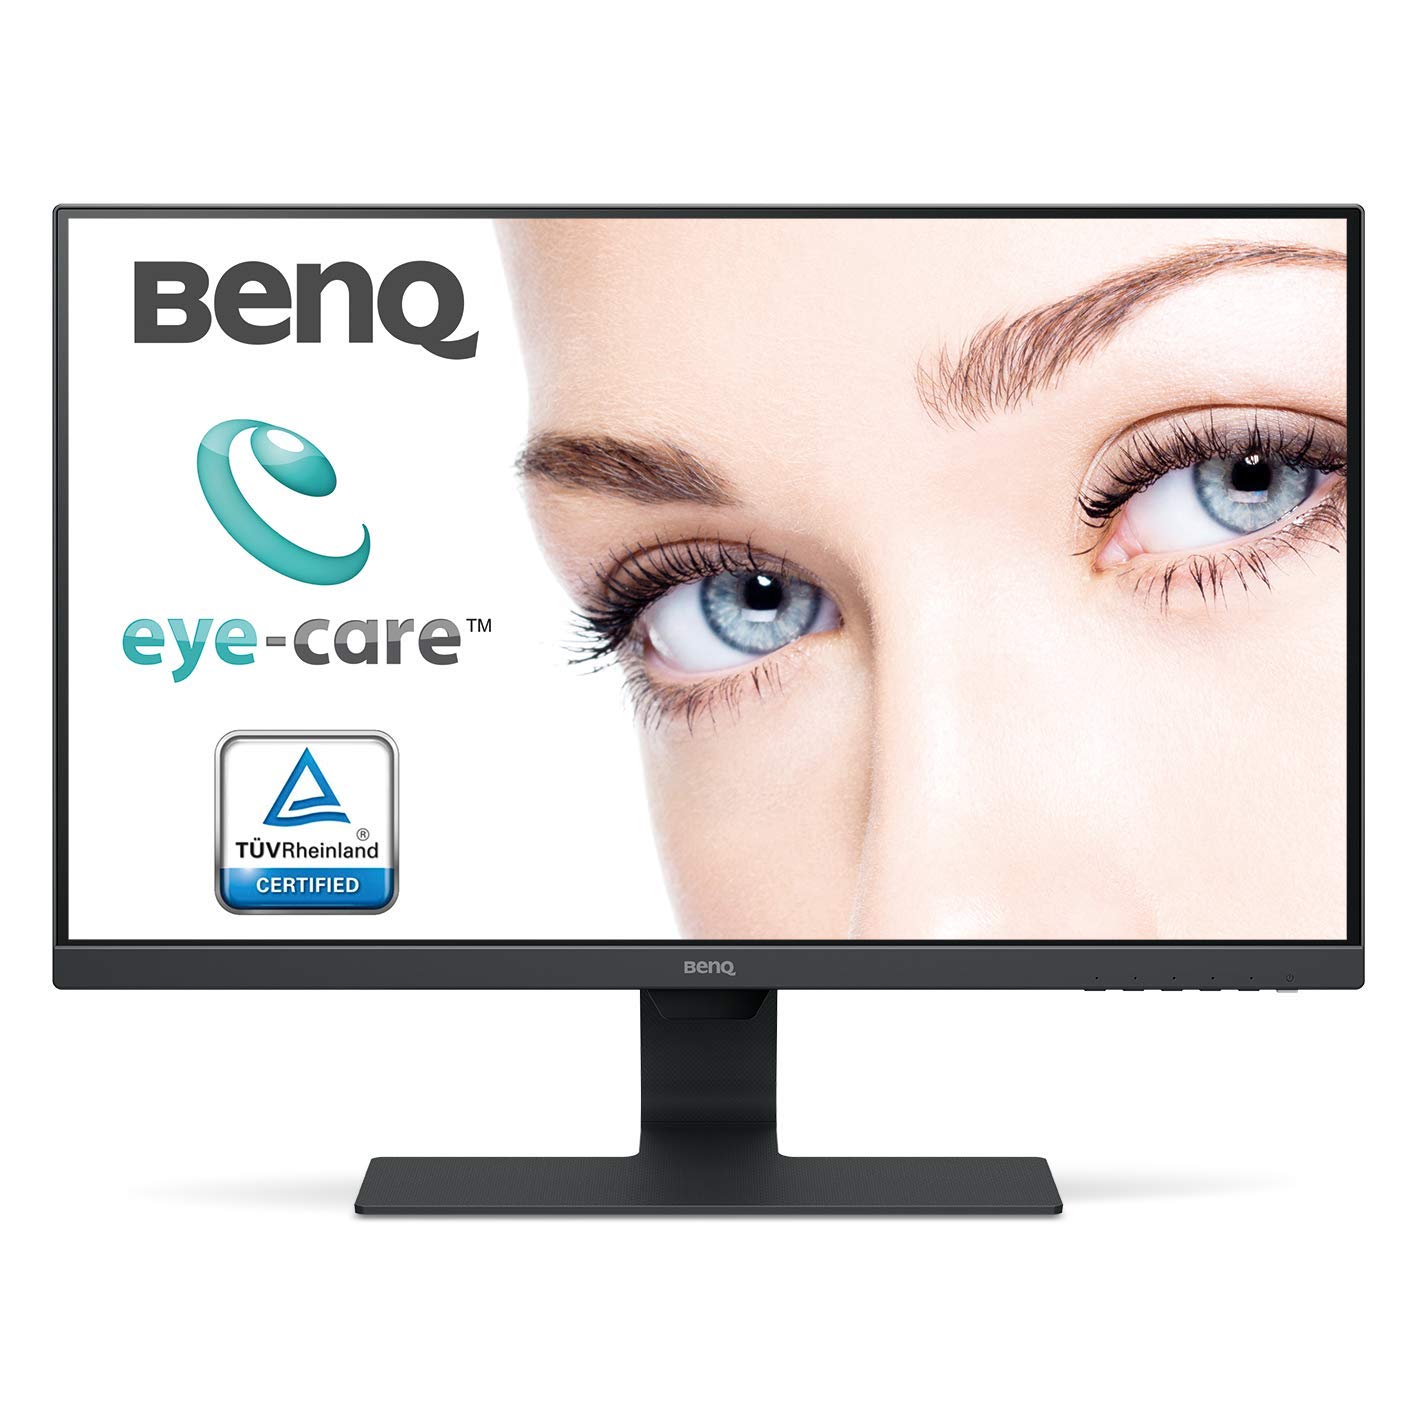 BenQ GW2780 27-inch 1080p FHD Eye-Care, IPS Monitor, Ultra-Slim Bezel, 60 Hz, Brightness Intelligence, 2Wx2 Speakers, Tilt, HDMI